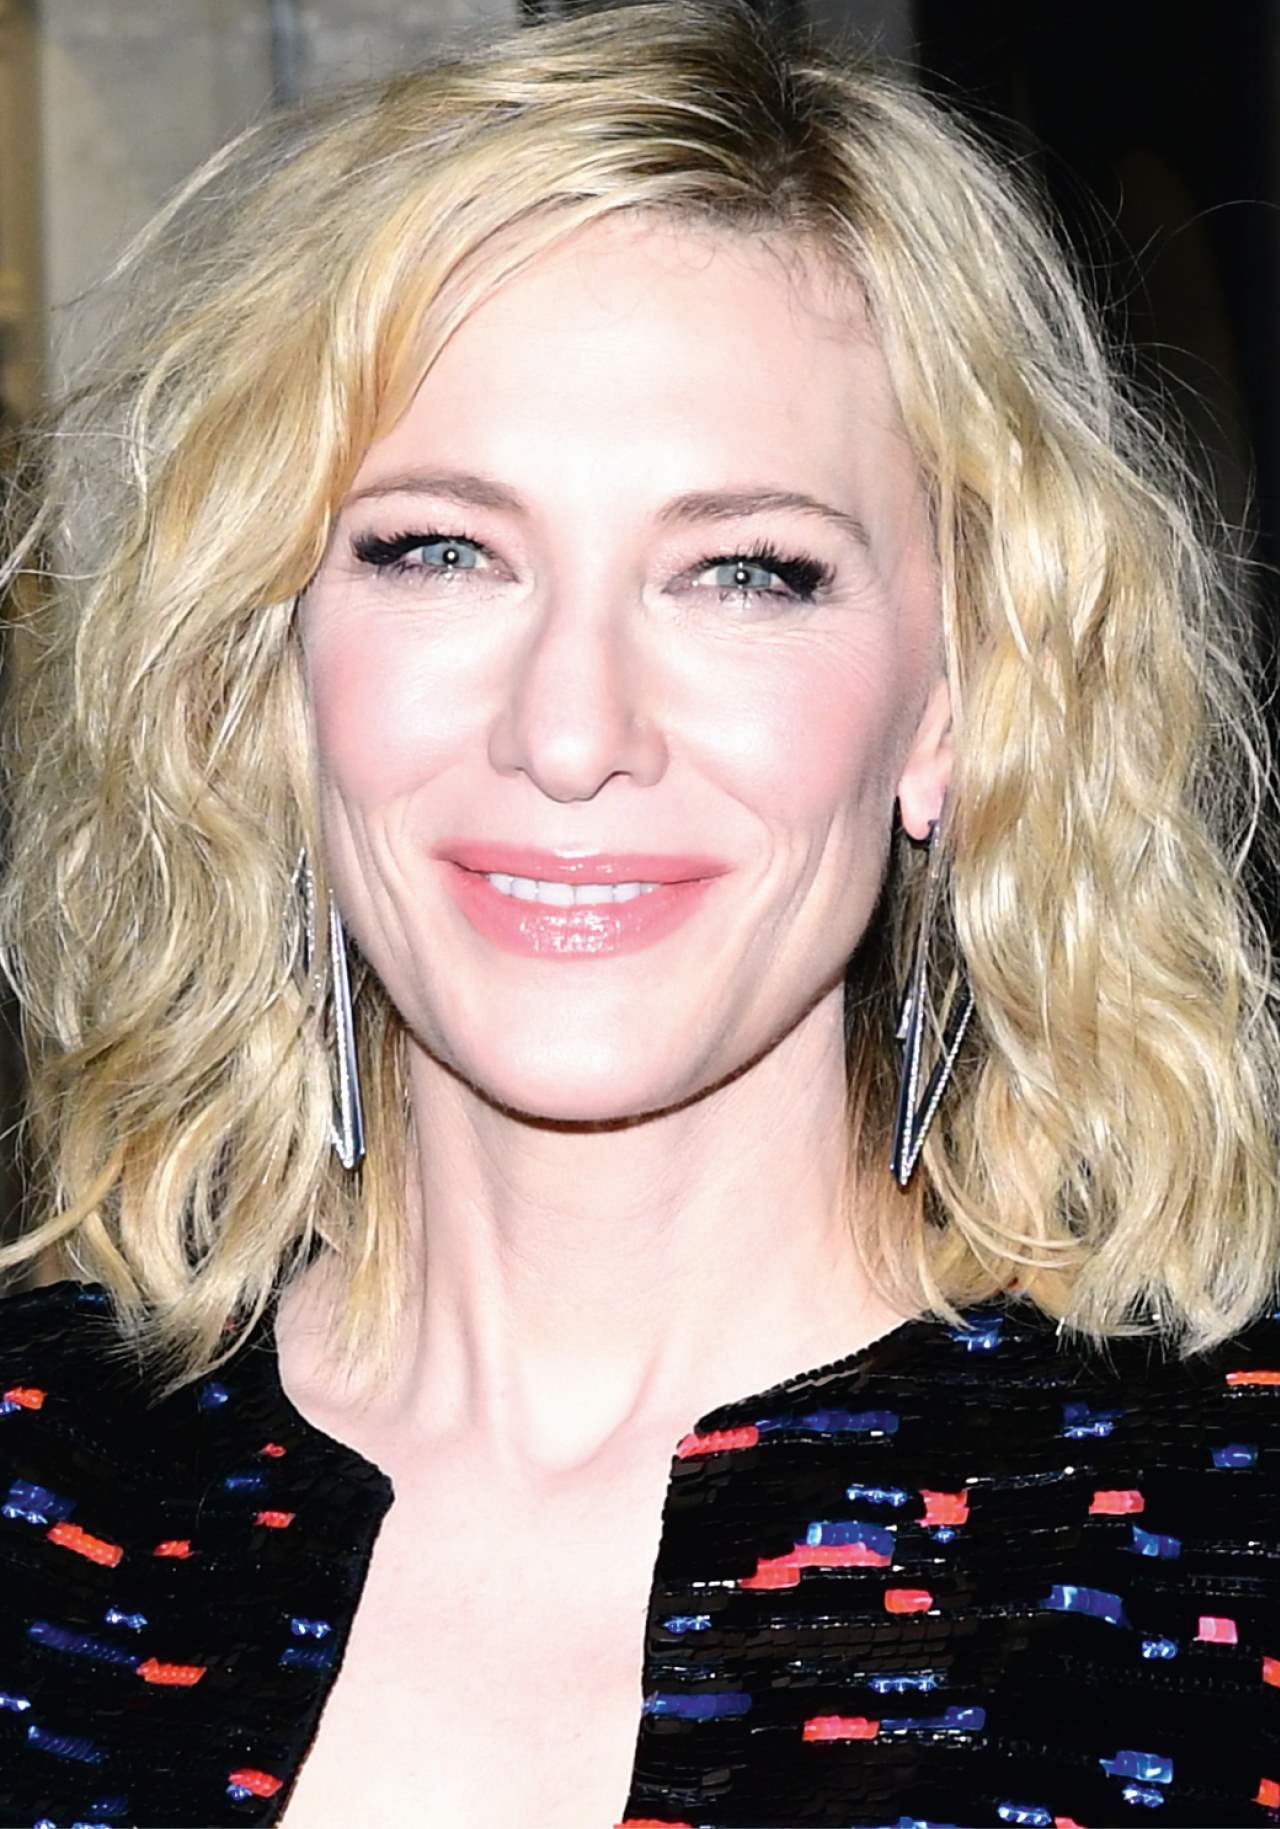 CAte Blanchett maquillaje párpados caídos